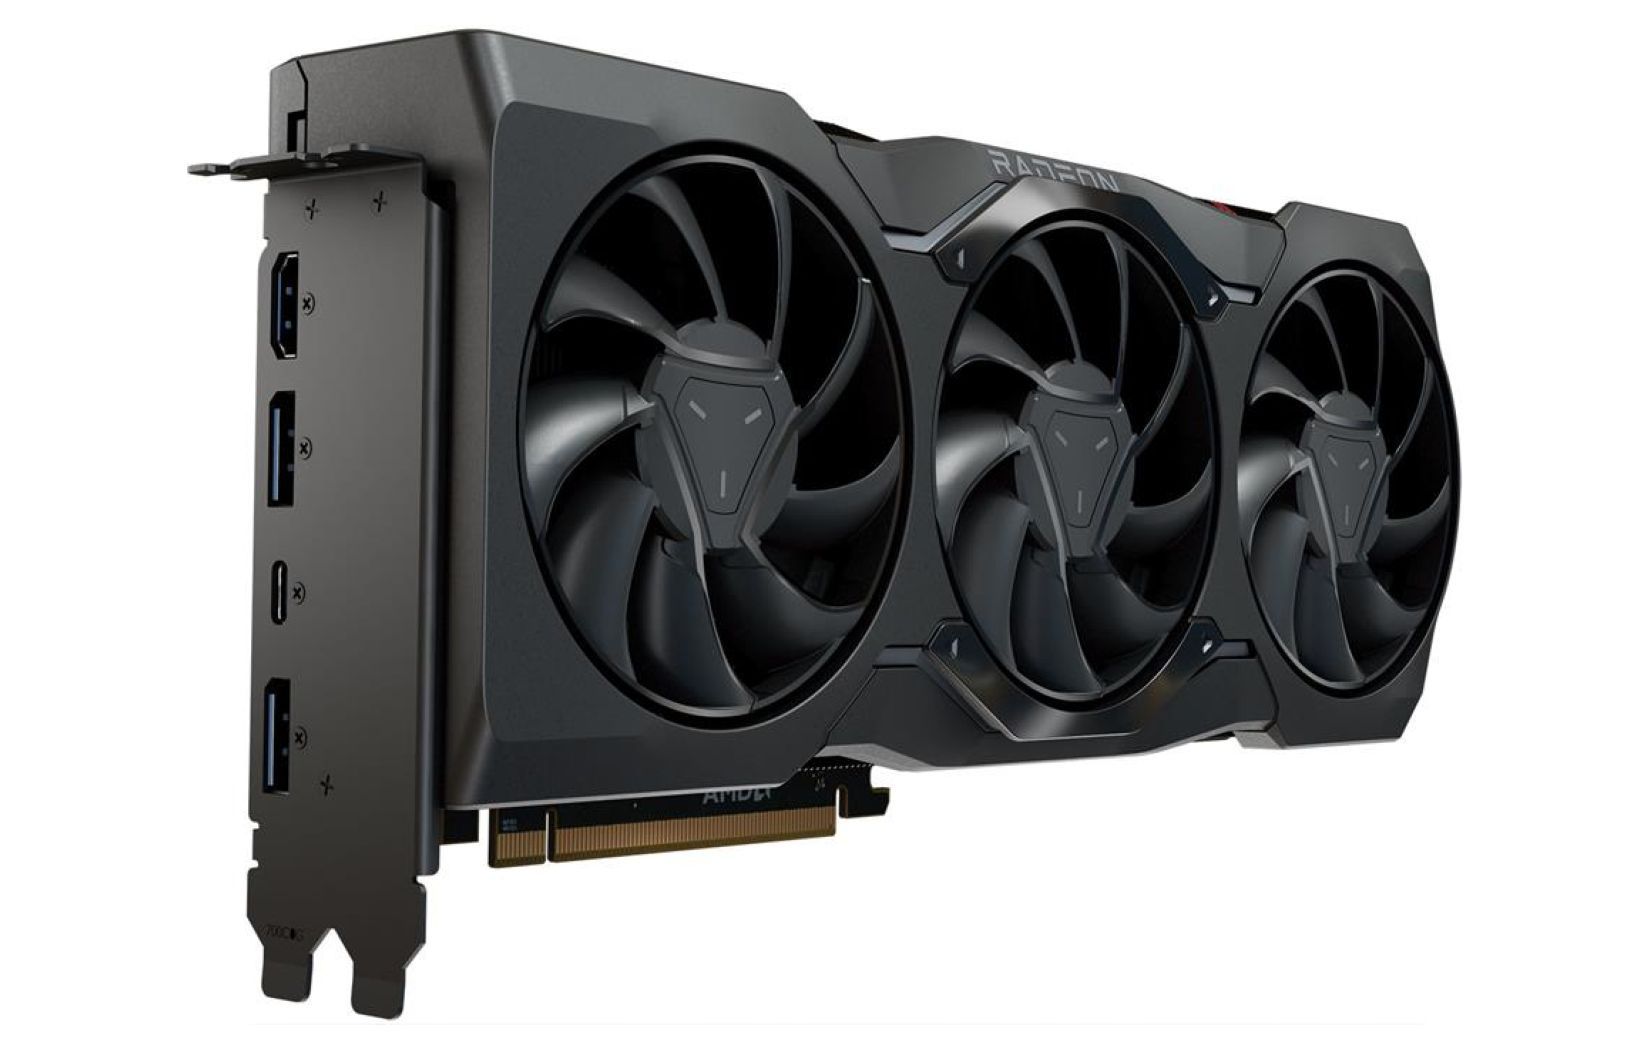 AMD เปิดตัวการ์ดจอ Radeon RX 7000 Series มาก่อน 2 รุ่นใหญ่สุด 7900 XTX และ 7900 XT เริ่มต้น 899 เหรียญ (ถูกกว่าคู่แข่งเยอะ)